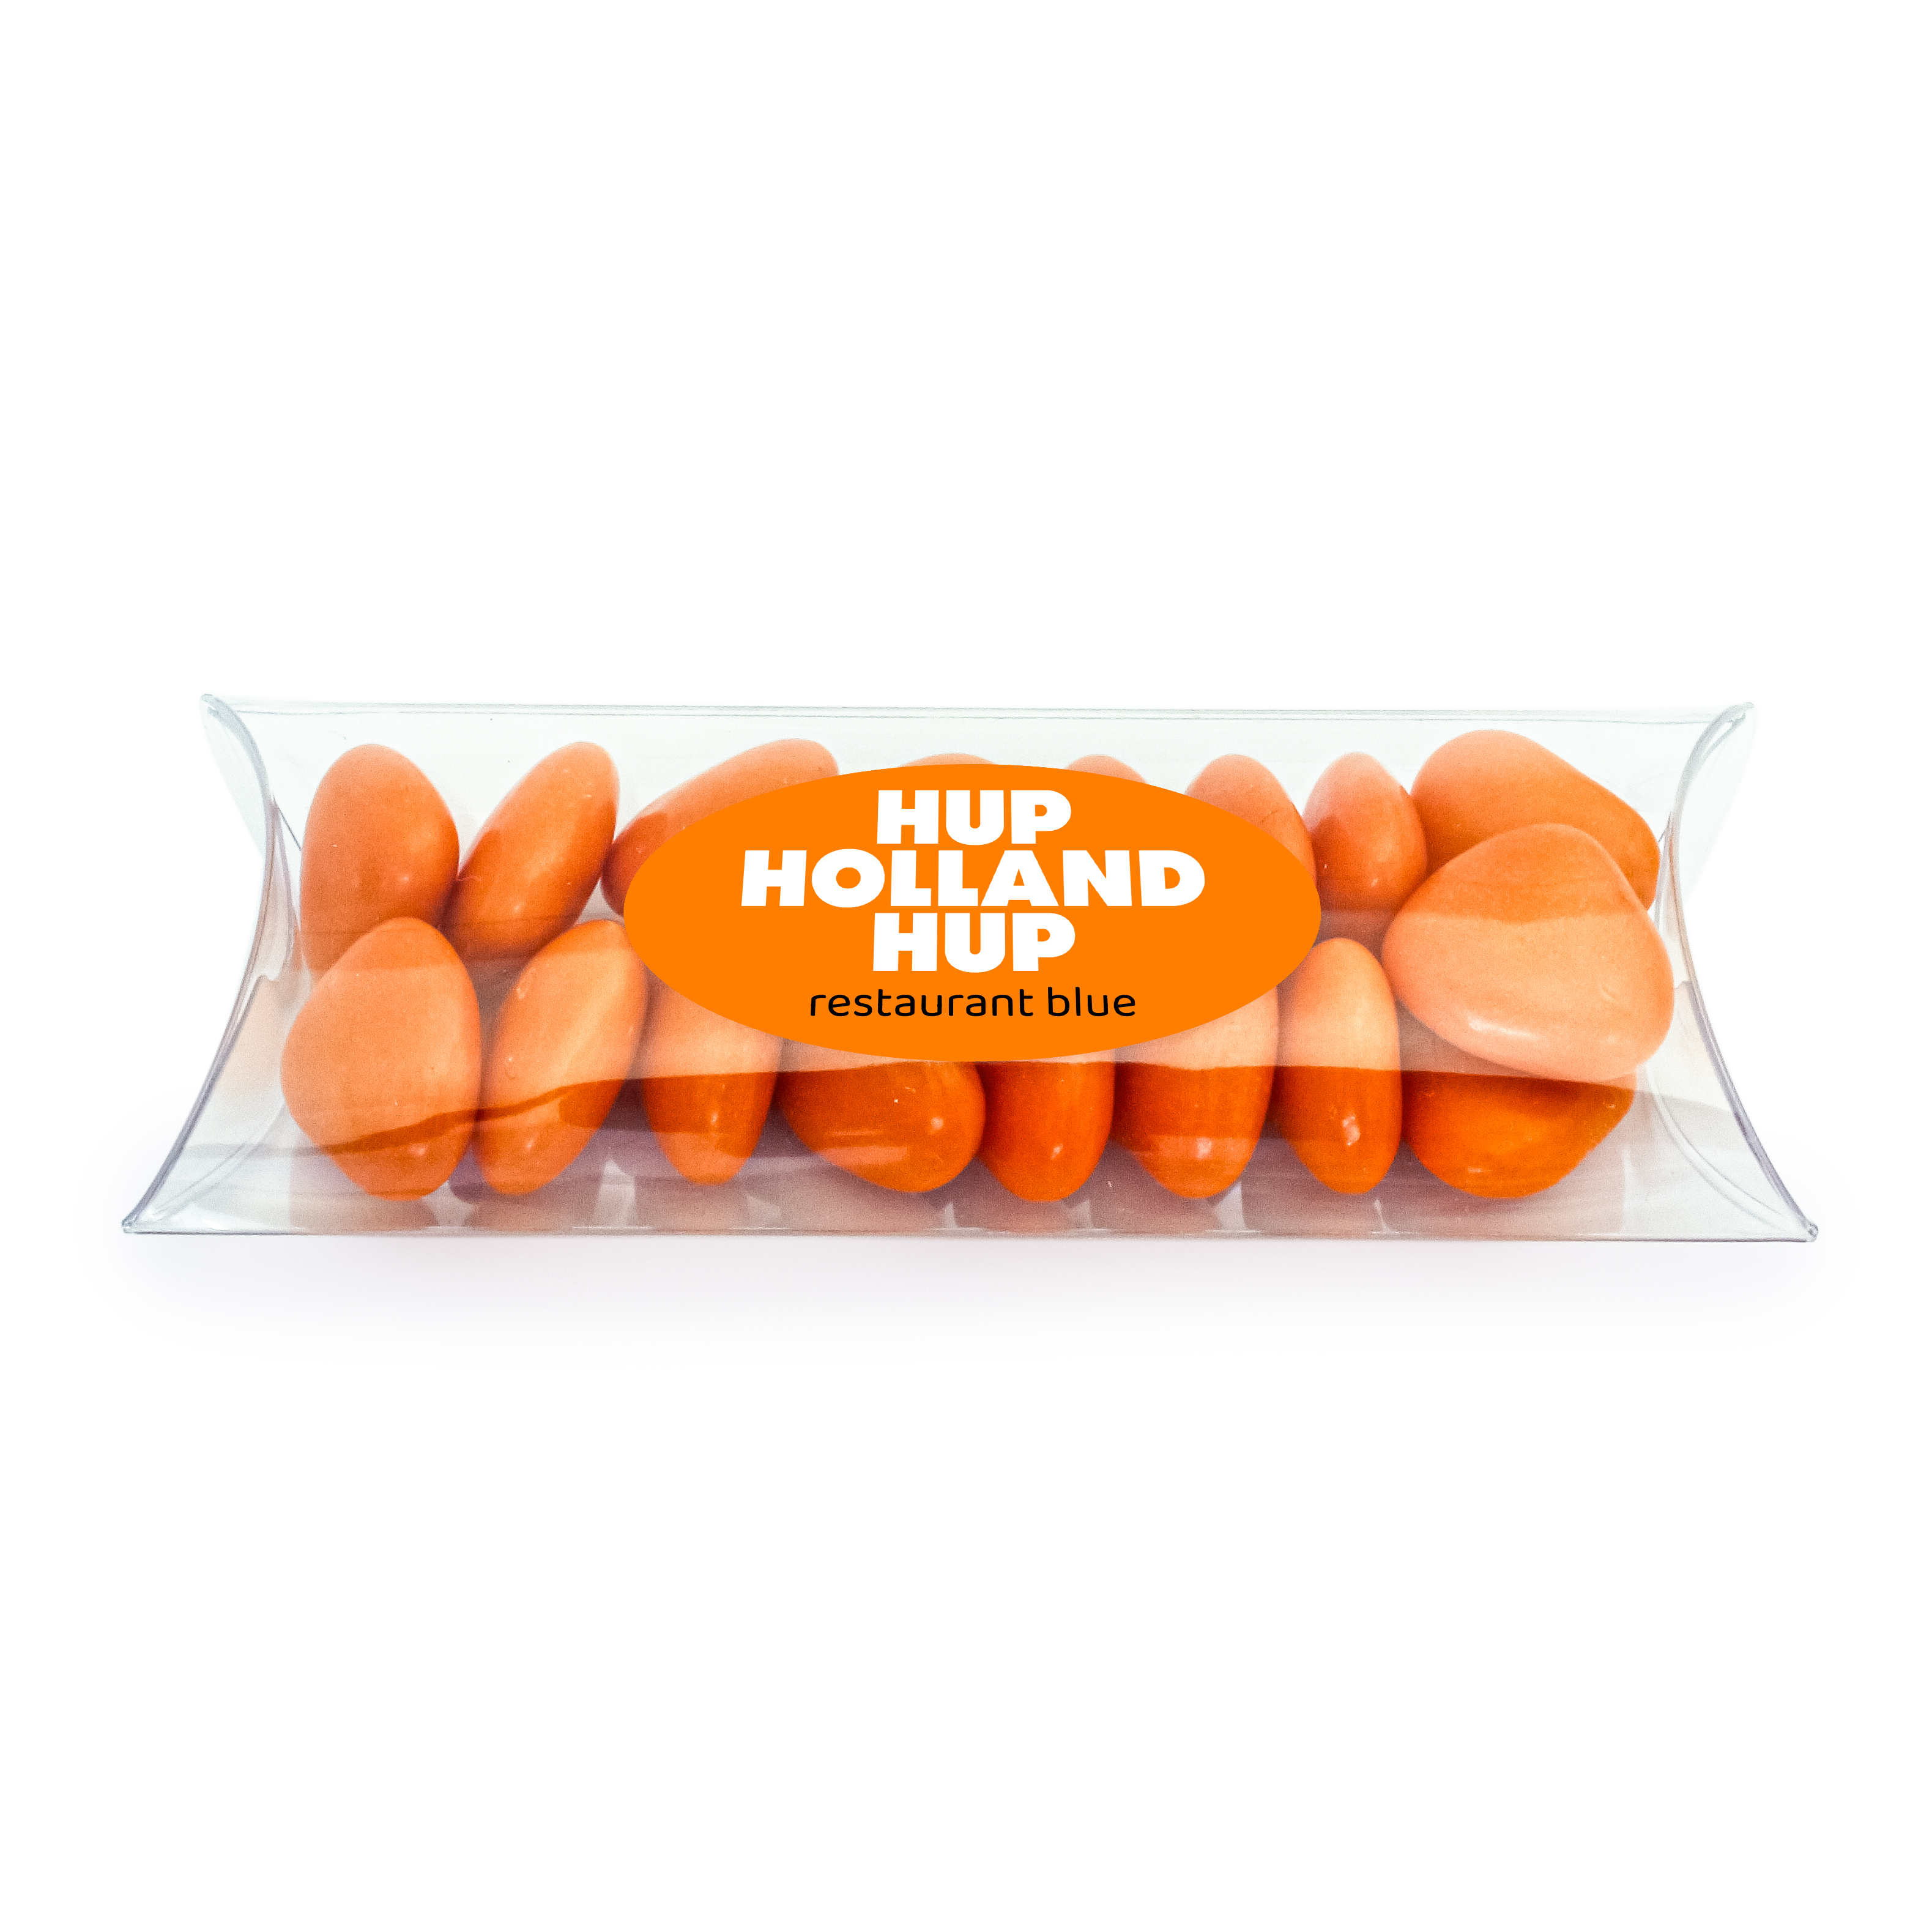 EK oranje bedankje - Hup Holland Hup